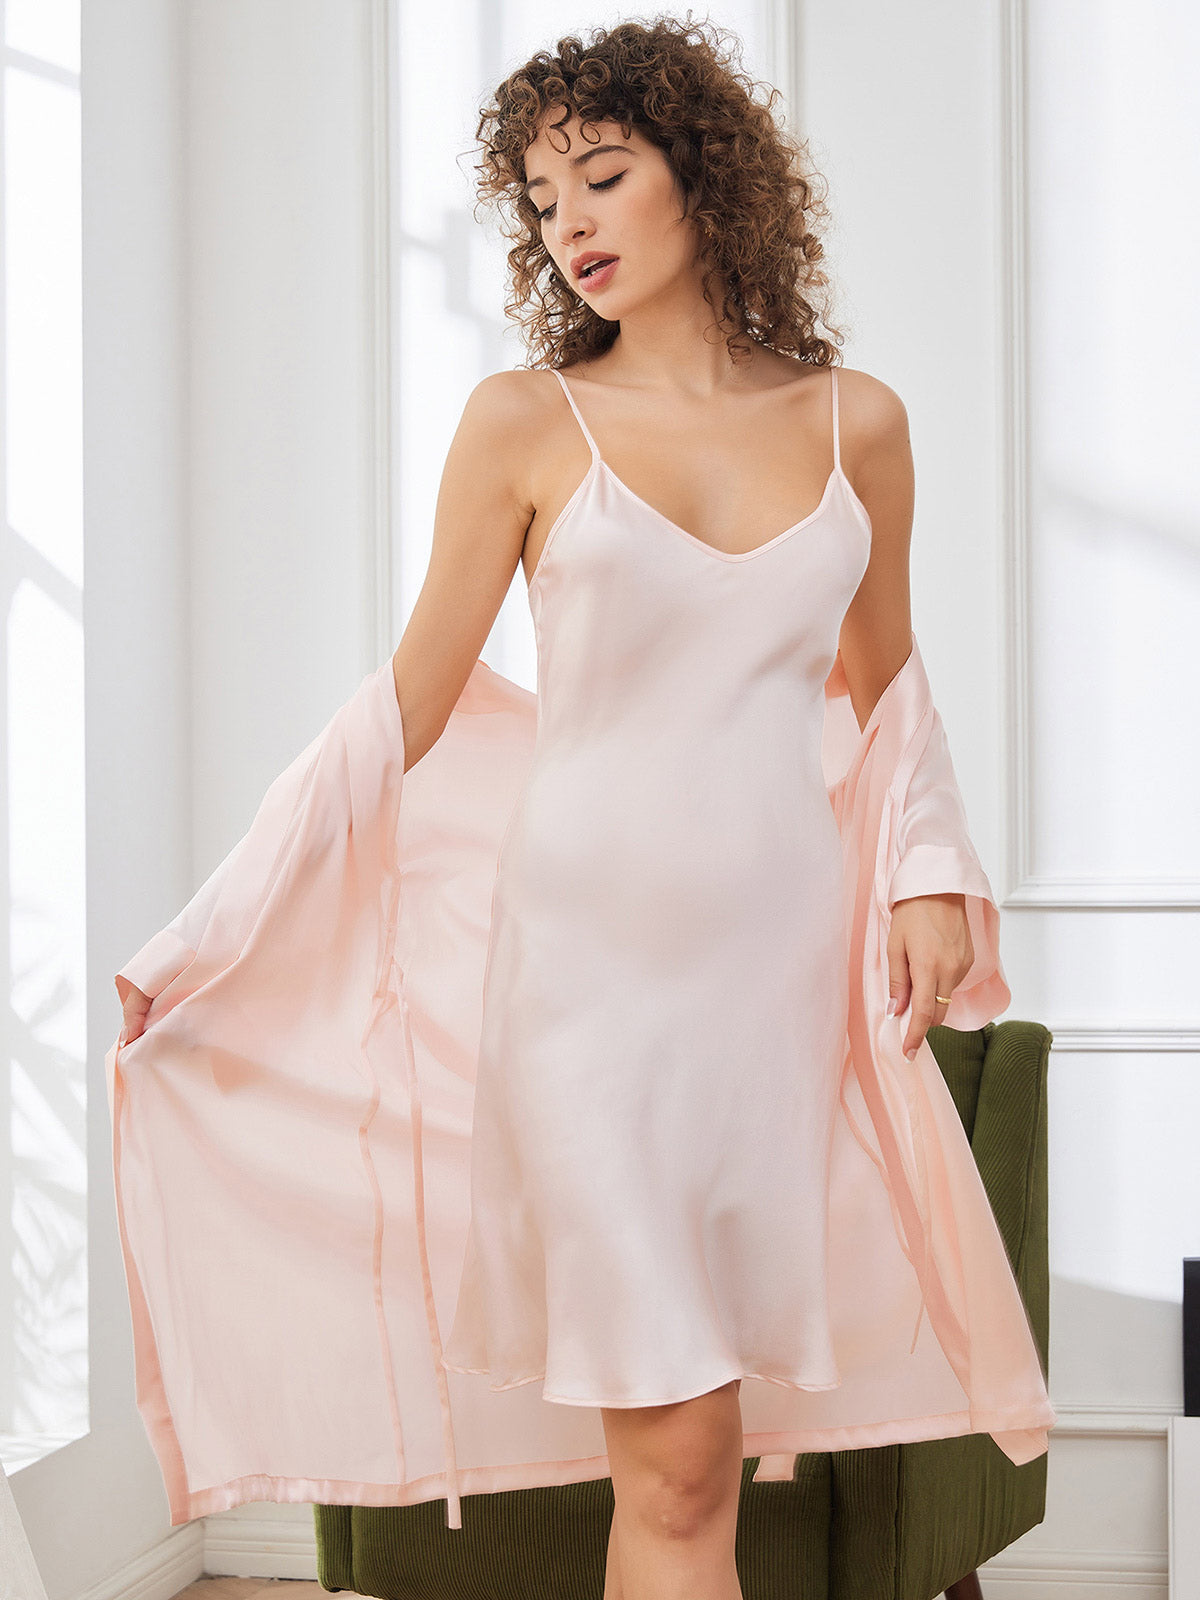 Baby Pink Silk Satin — Classic Textiles